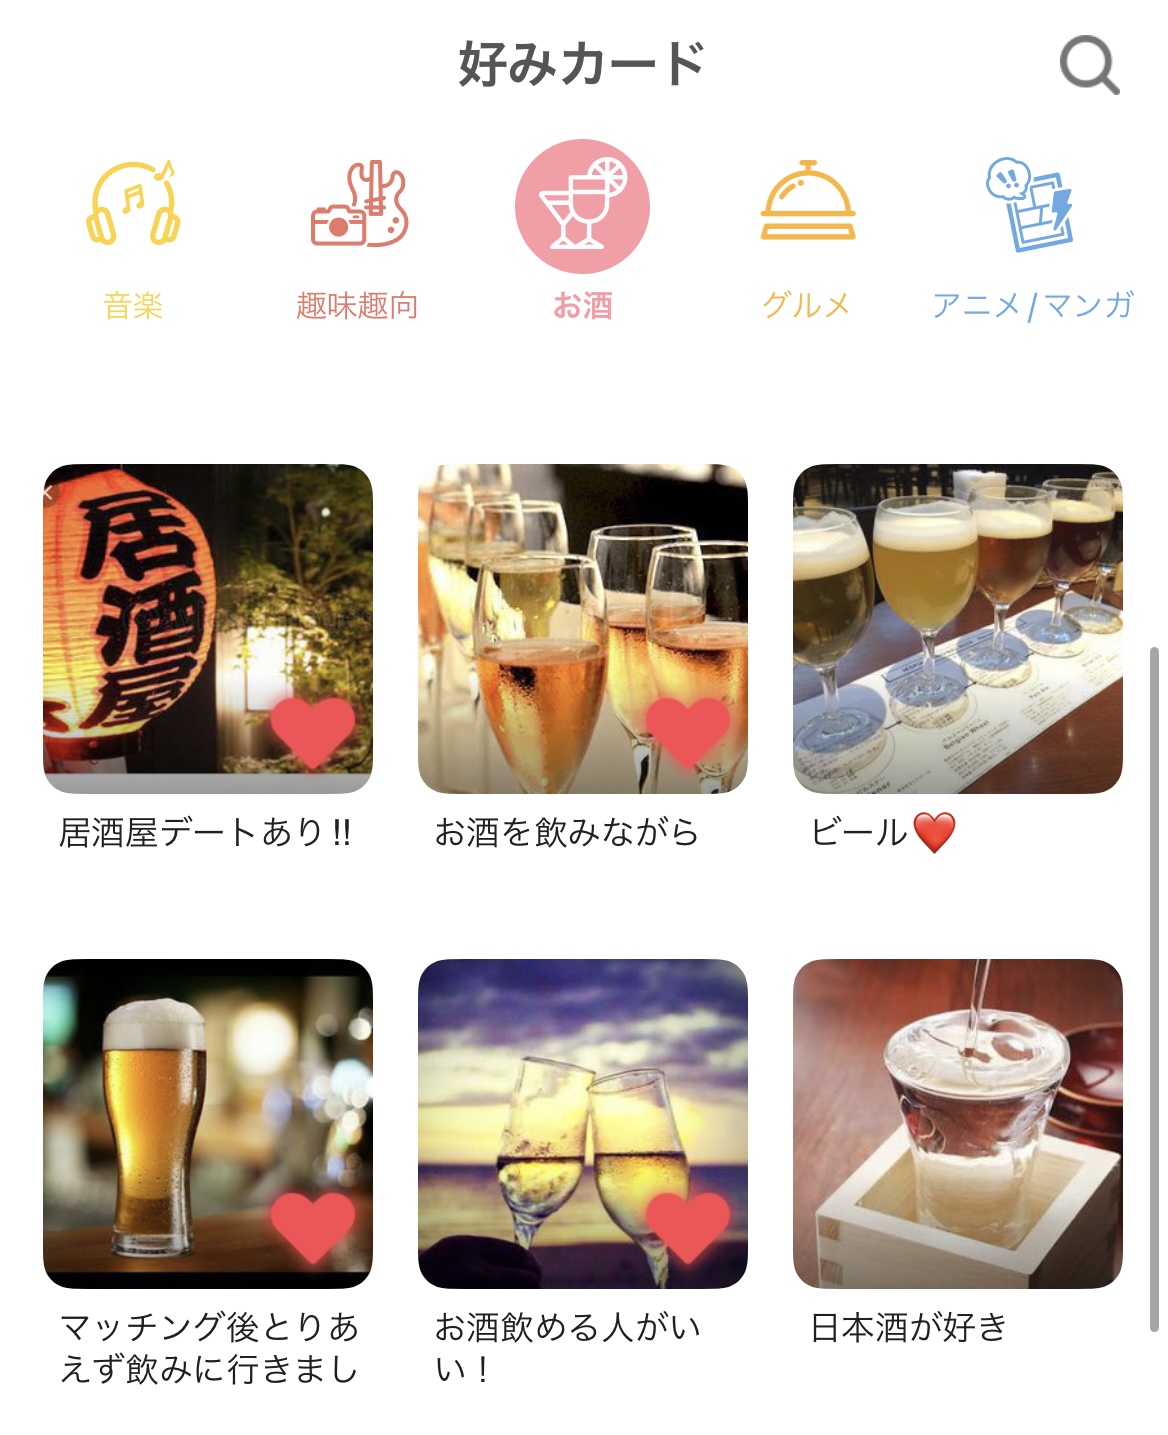 with　好みカード　お酒